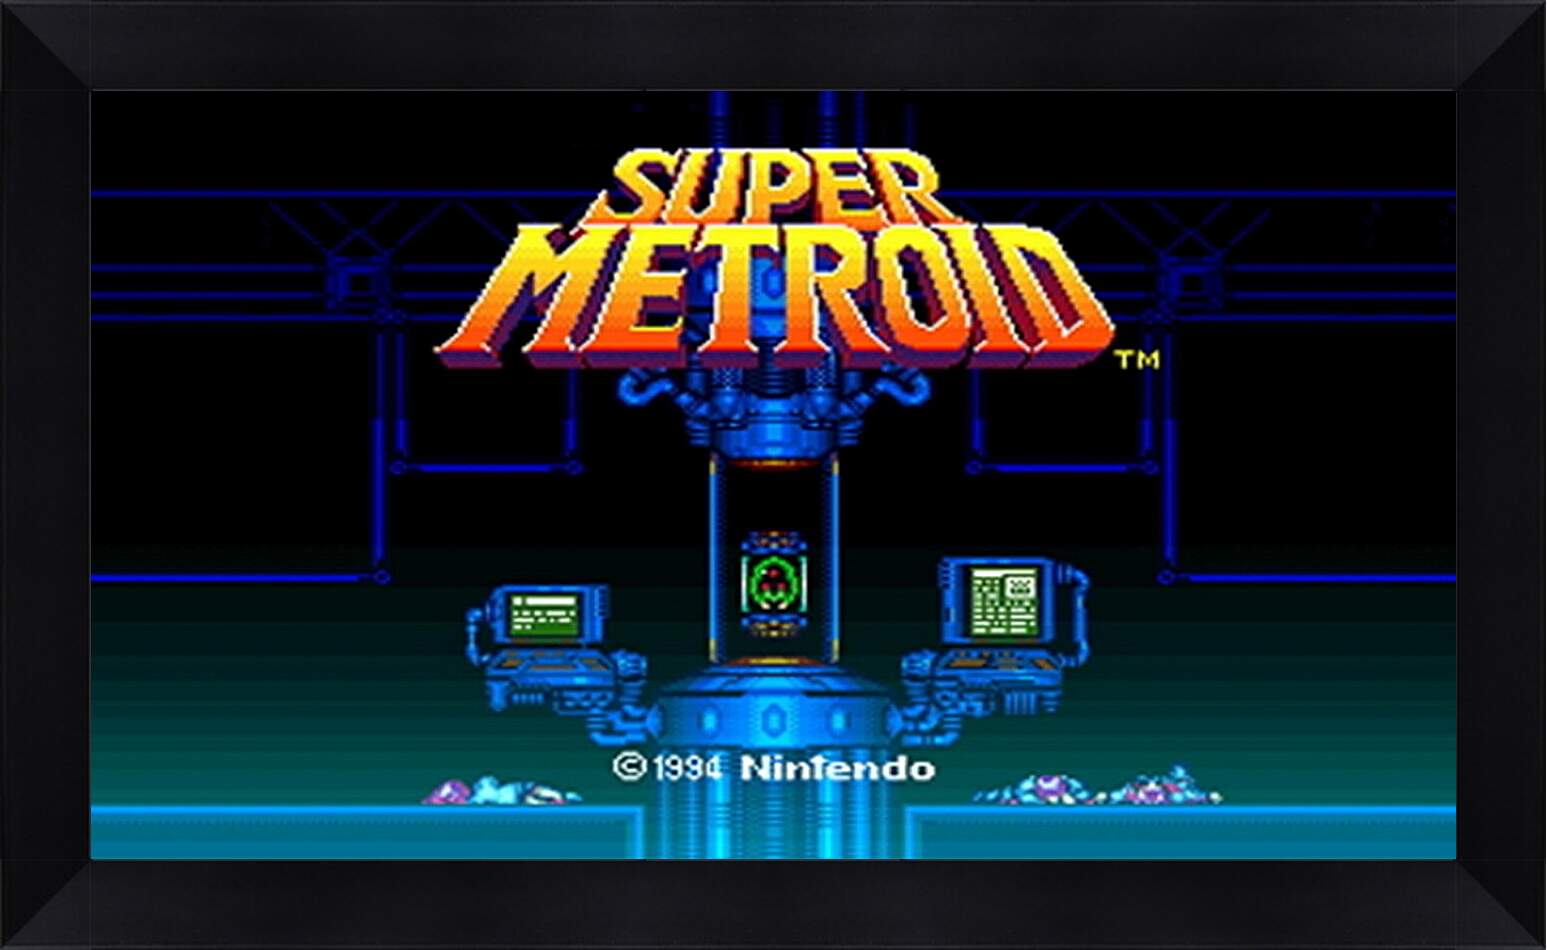 Картина в раме - Super Metroid
